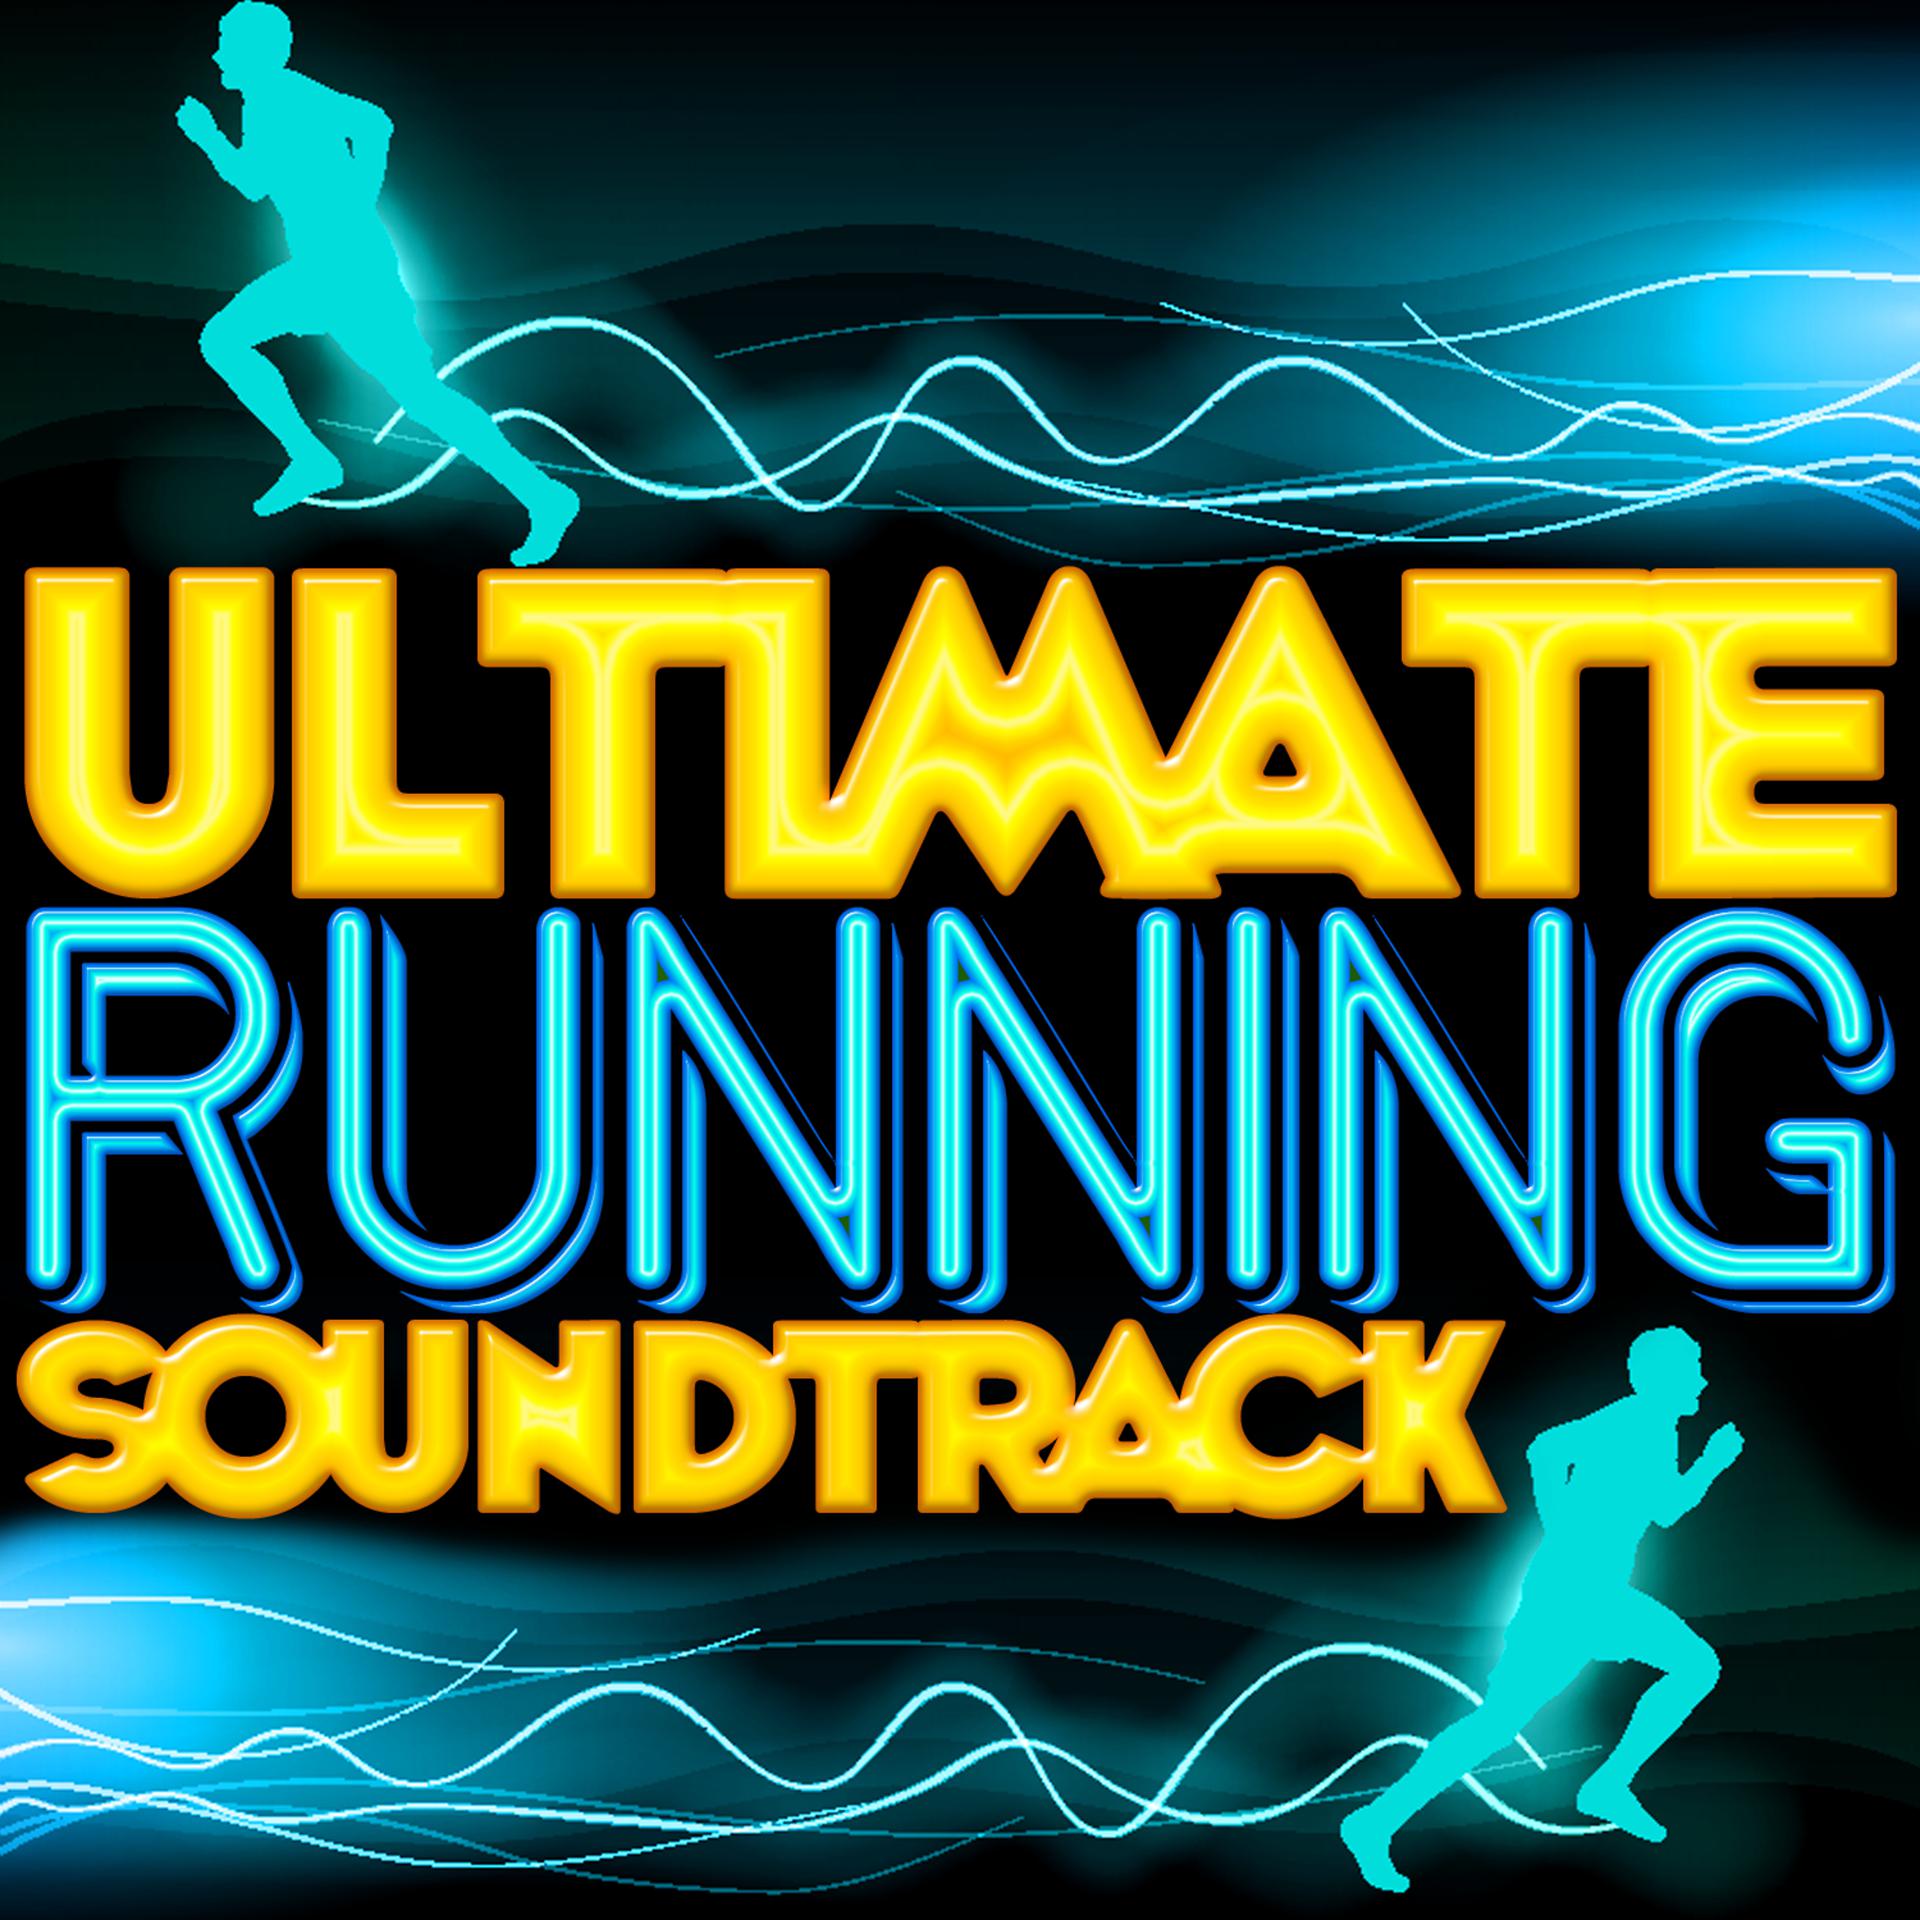 Obama Run Soundtrack. Runner soundtrack